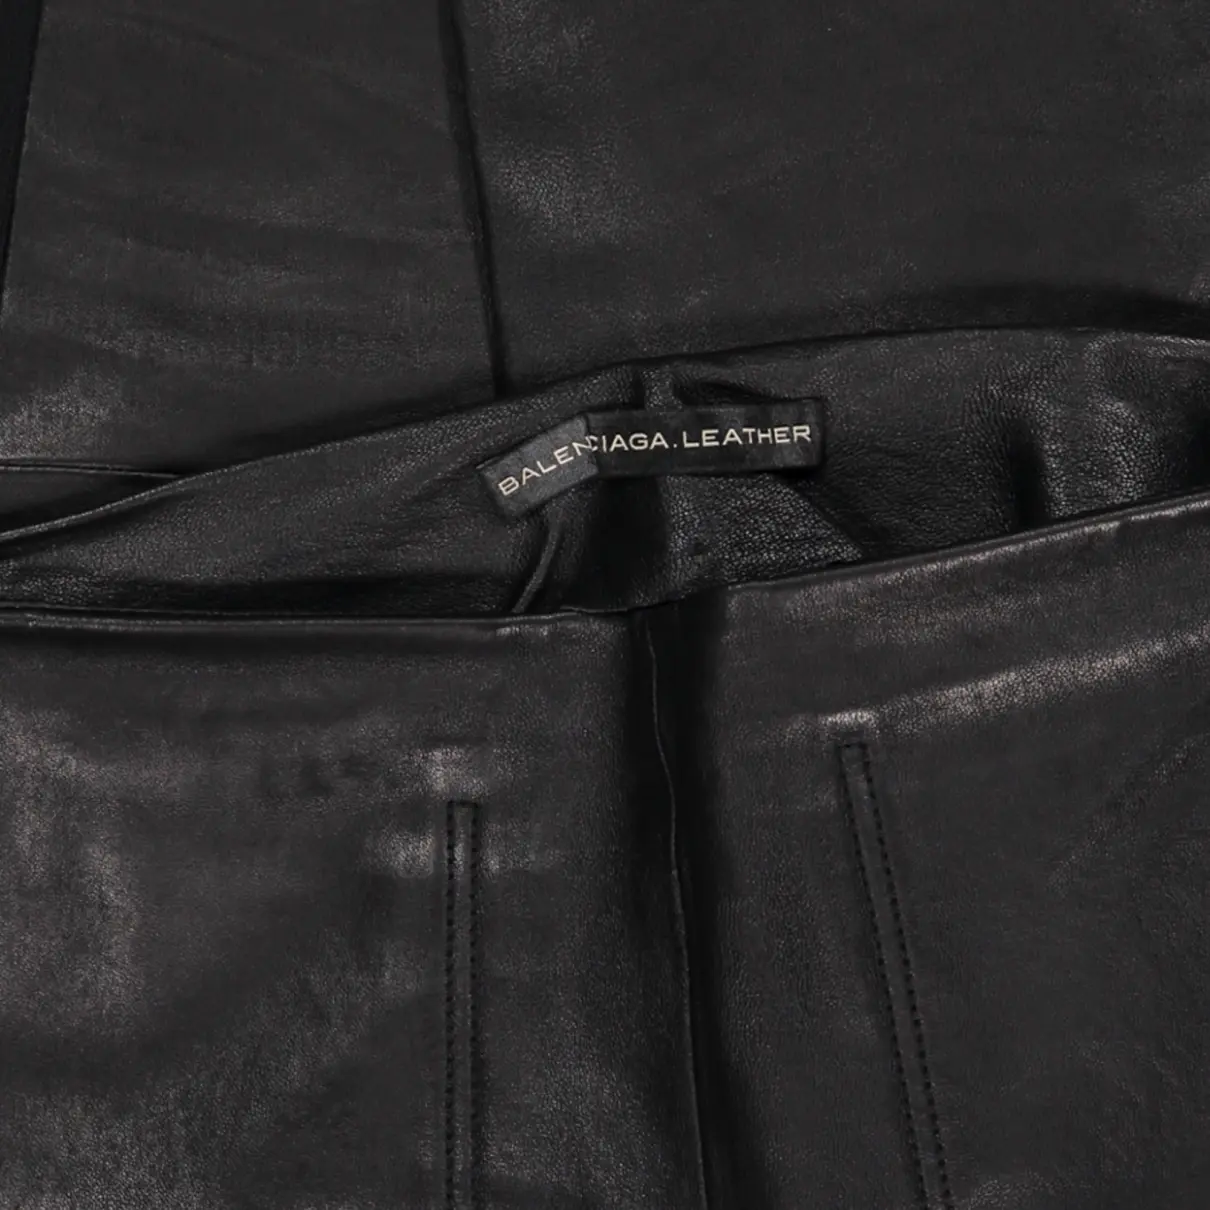 Buy Balenciaga Leather slim pants online